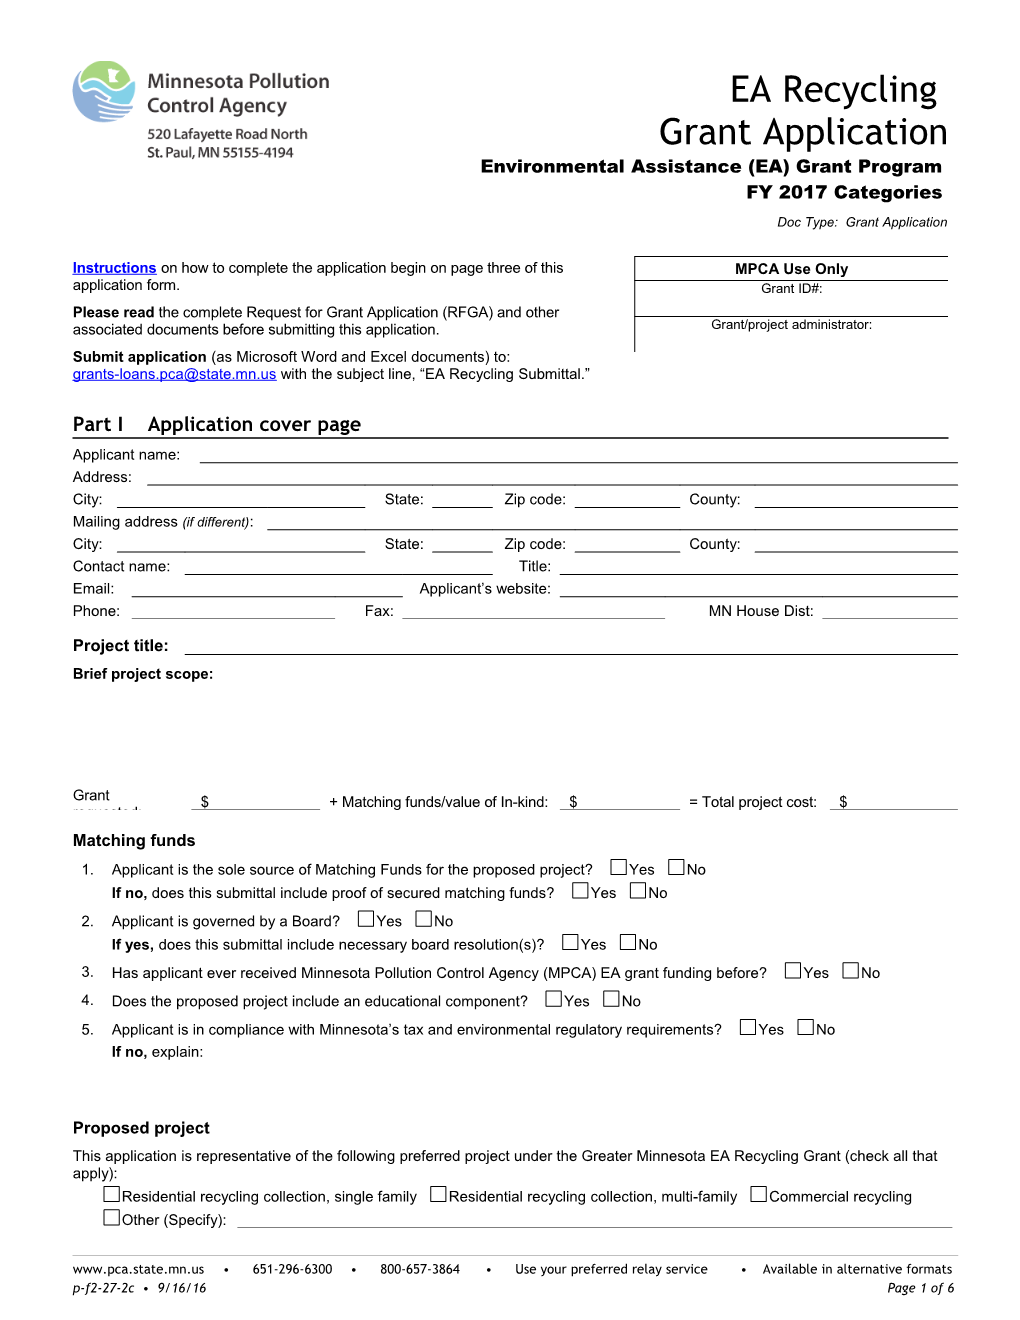 EA Recycling Grant Application - Environmental Assistance (EA) Grant Program - Form